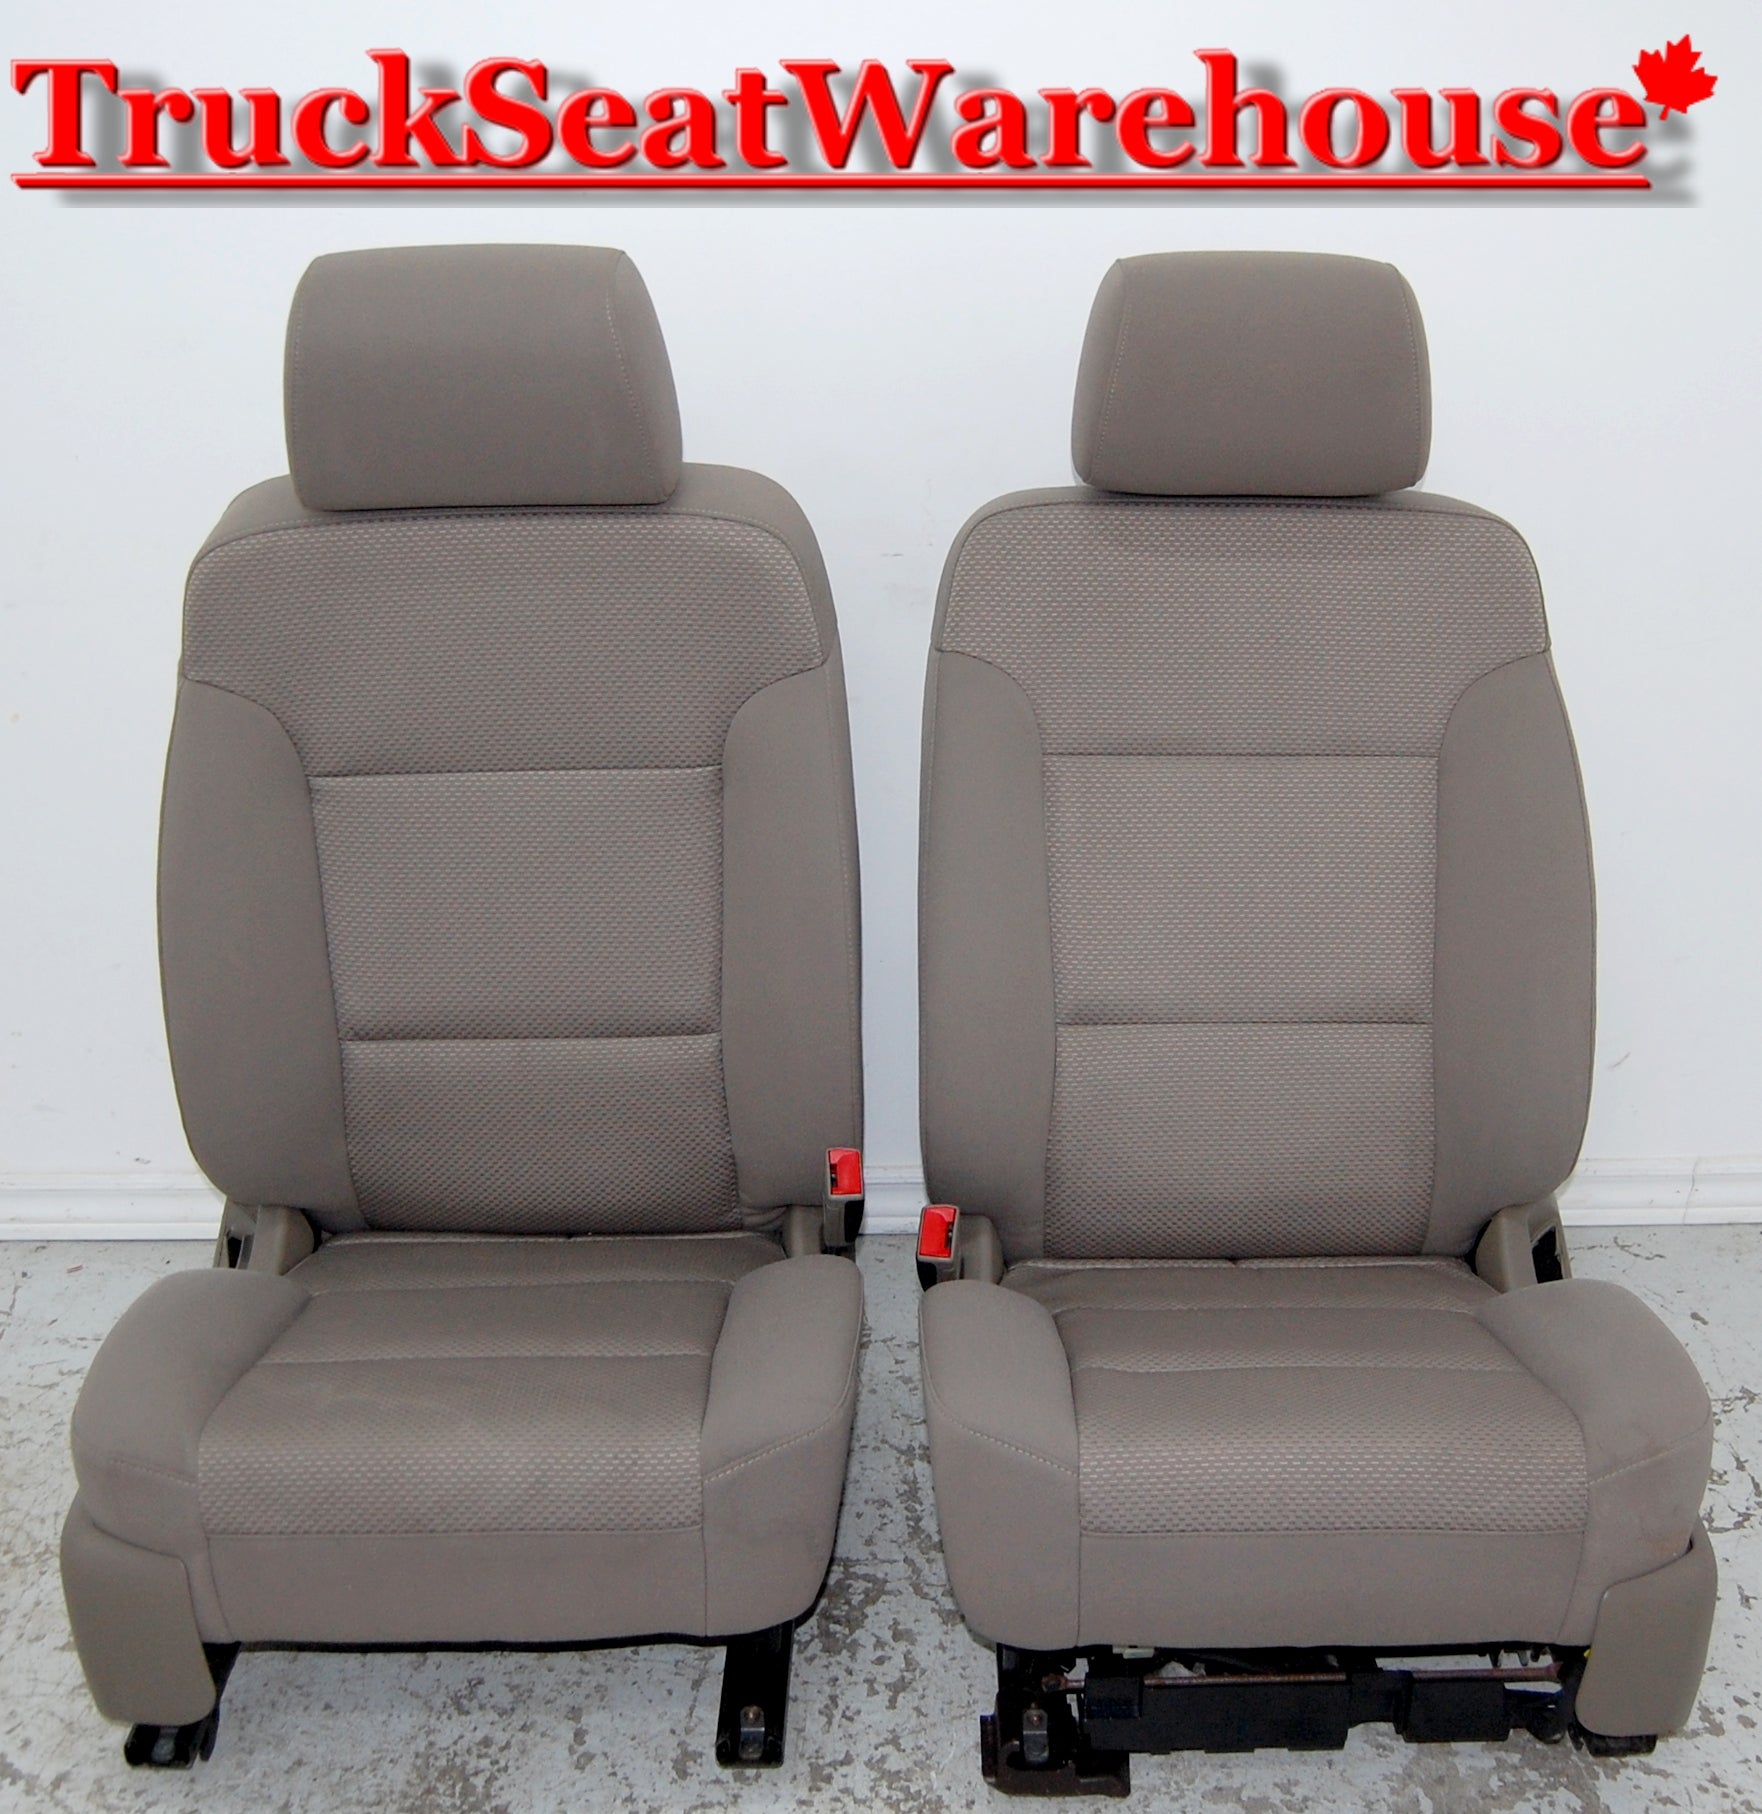 Tan cloth power front seats from a 2015 Chevy Silverado truck .  Fits GMC Sierra yukon tahoe suburban